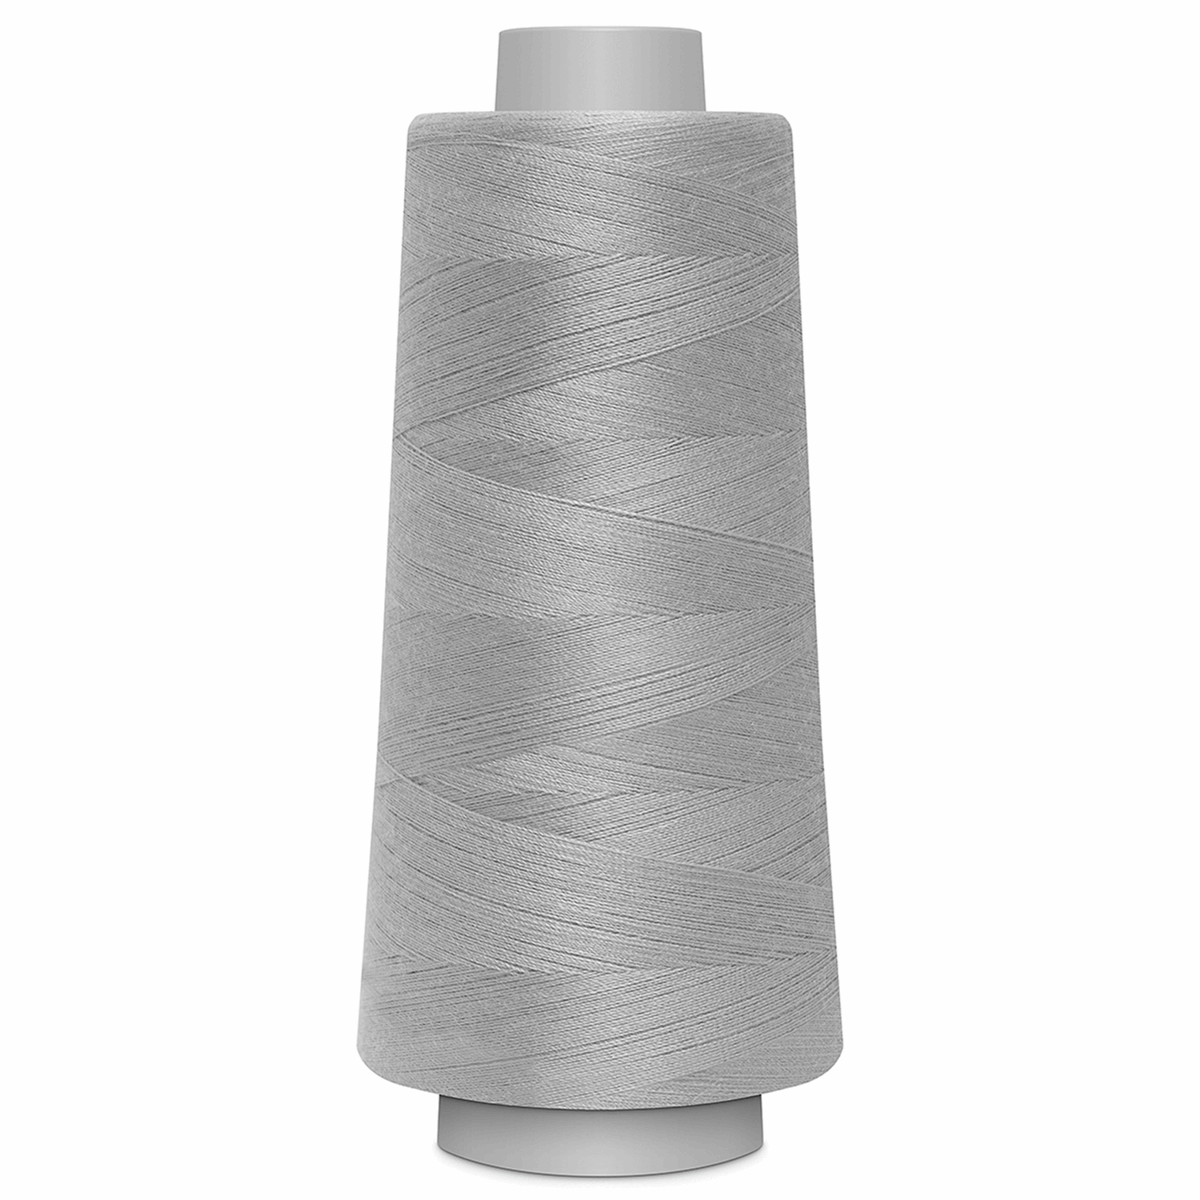 TOLDI-LOCK Light Grey Overlock Thread, 2500m from Jaycotts Sewing Supplies